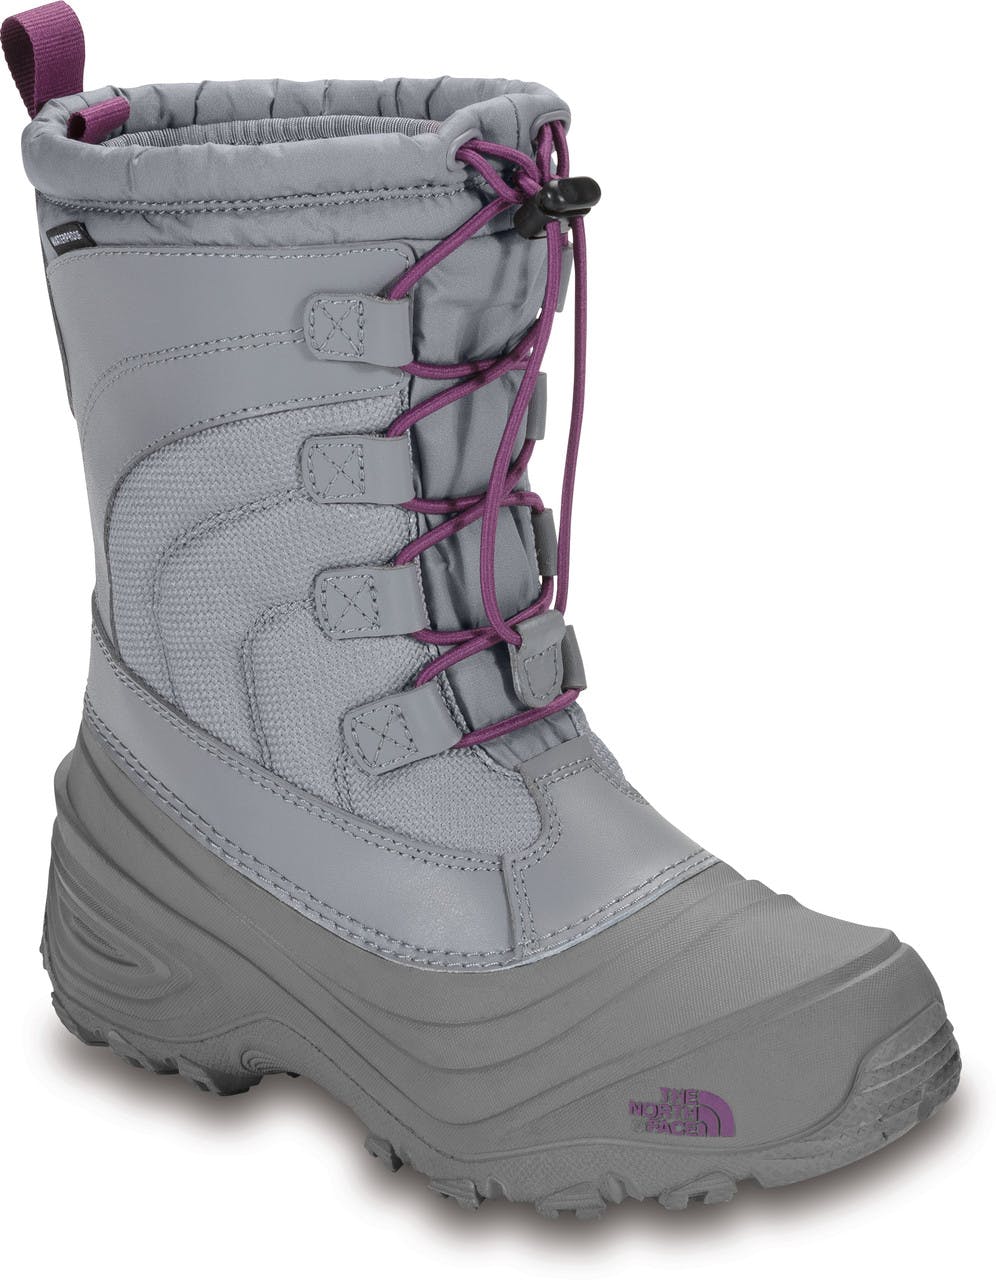 Alpenglow IV Waterproof Winter Boots Frost Grey/Wood Violet